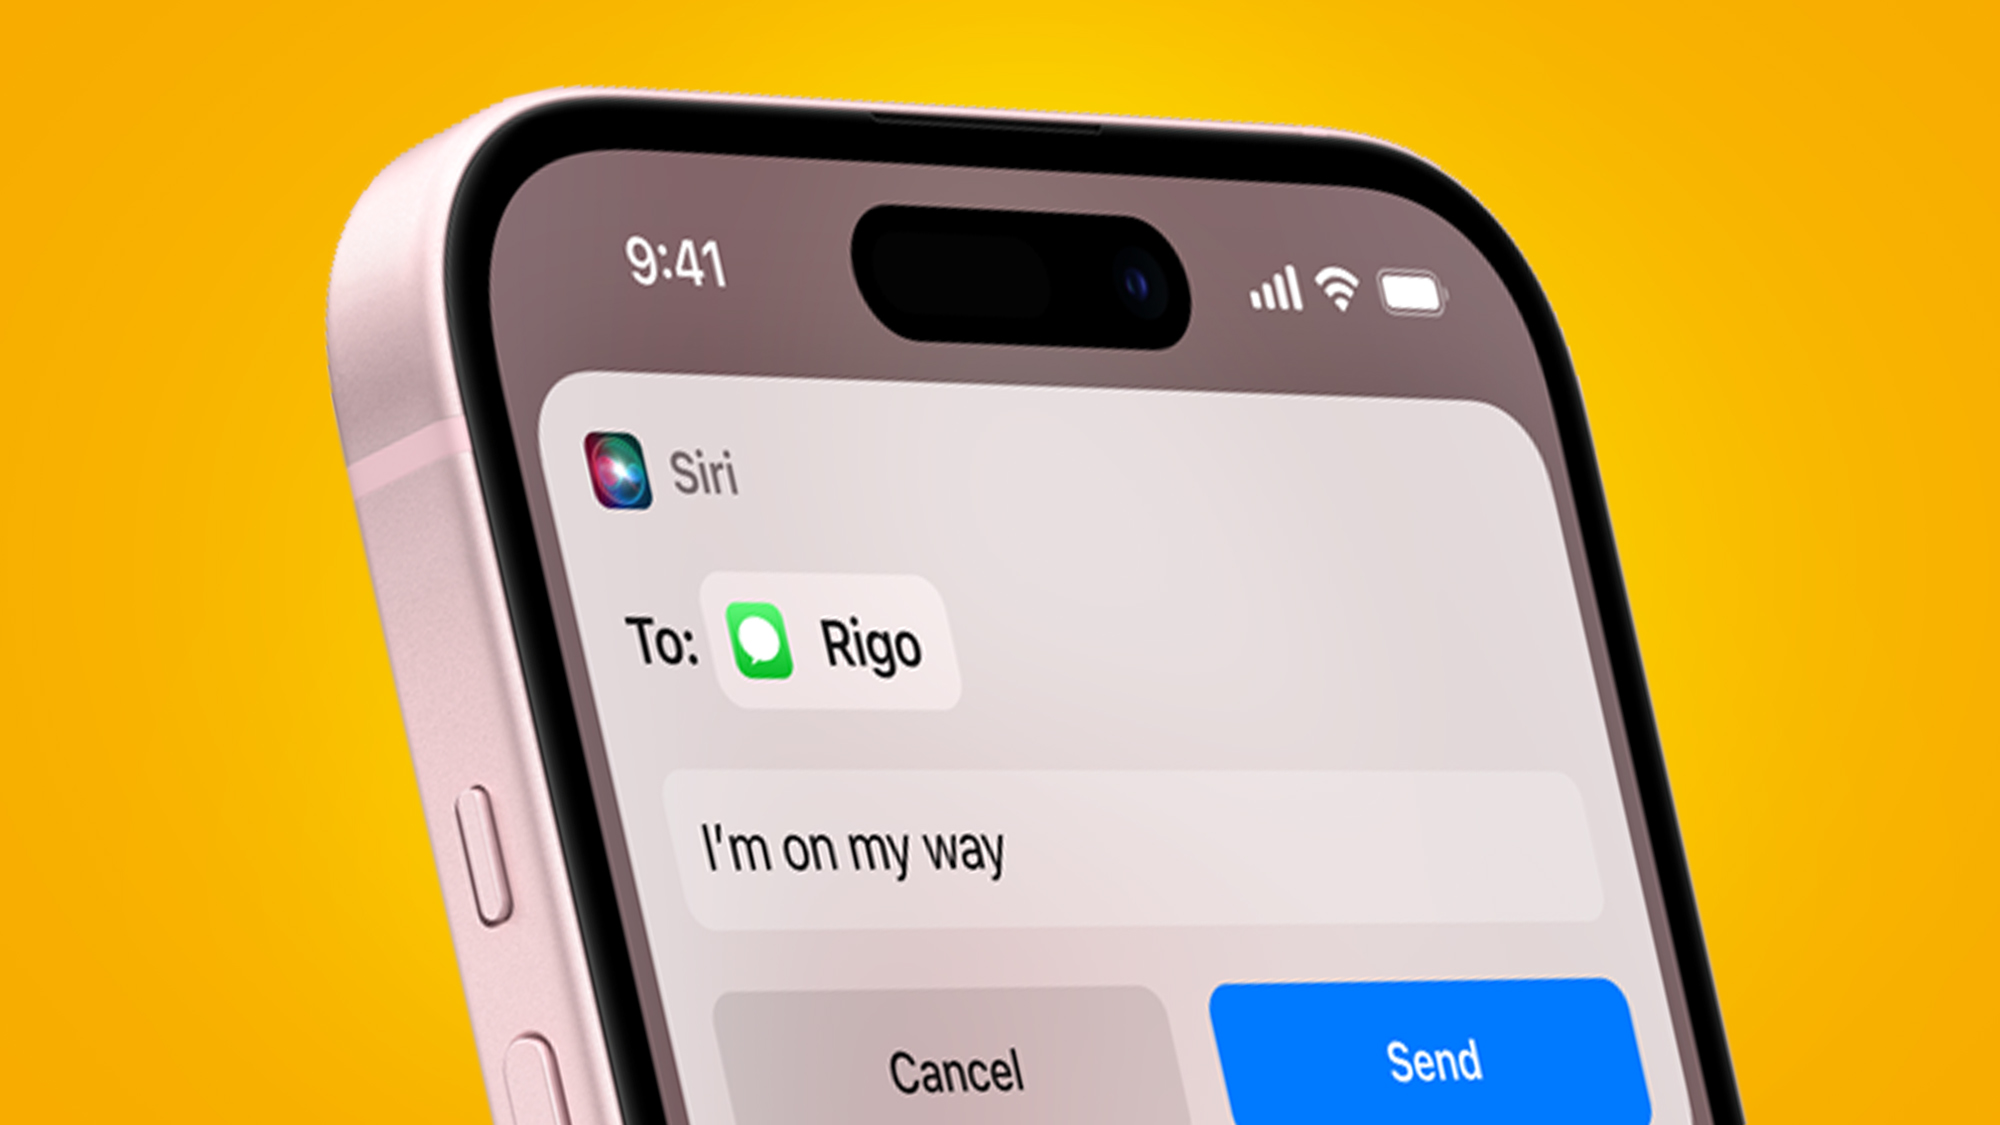 An iPhone on an orange background showing Siri